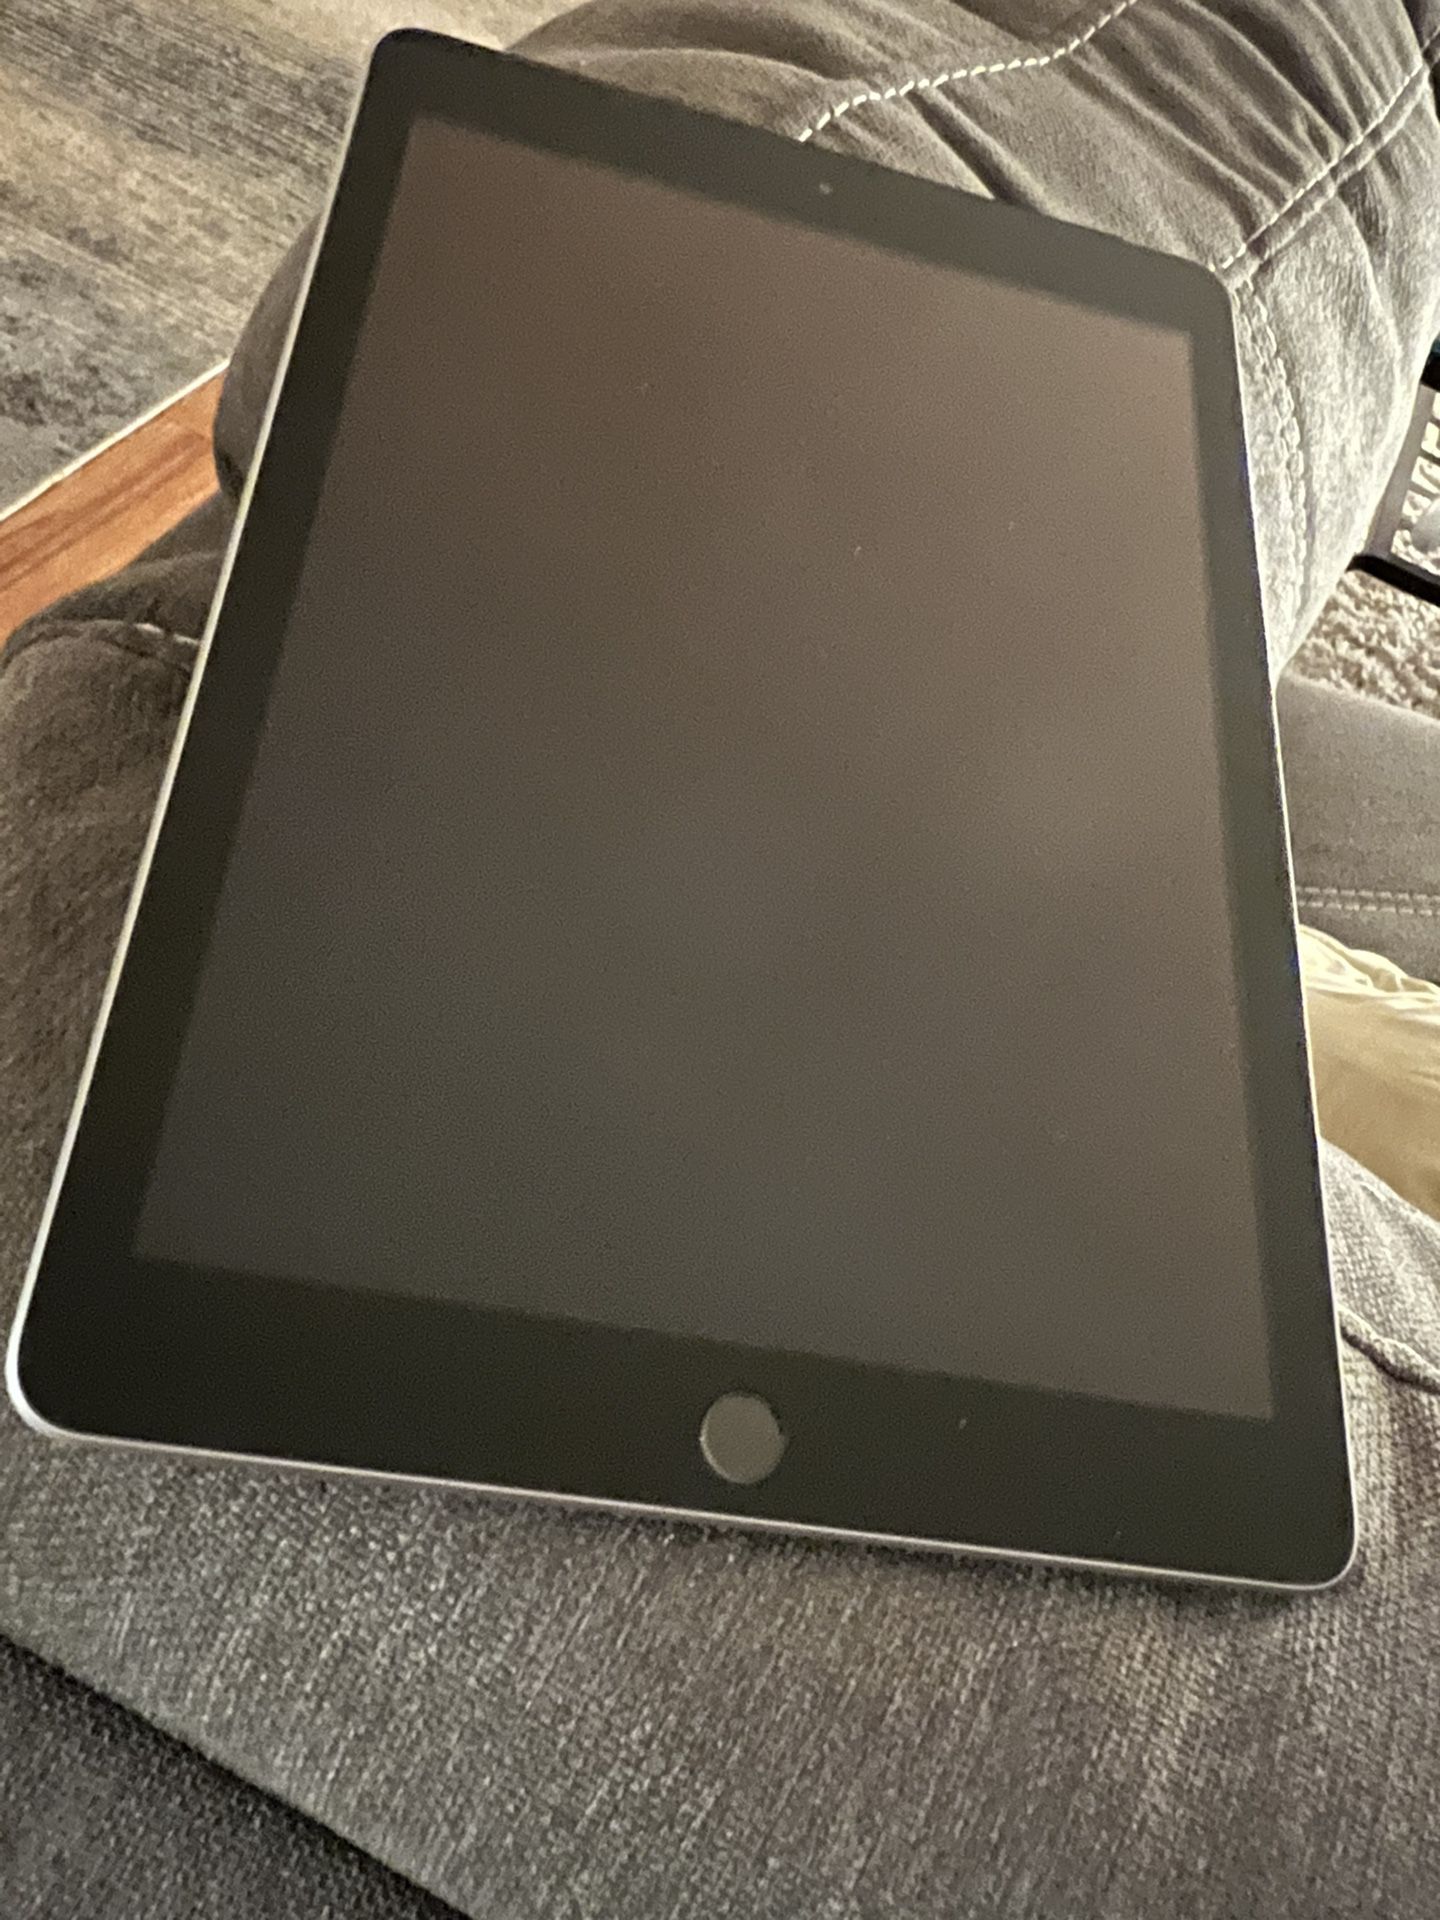 Mellem Cornwall Give Apple iPad 6th Gen. 32GB Wi-Fi + Cellular (Verizon) MR6R2LL/A A1954 for  Sale in Berwyn, PA - OfferUp